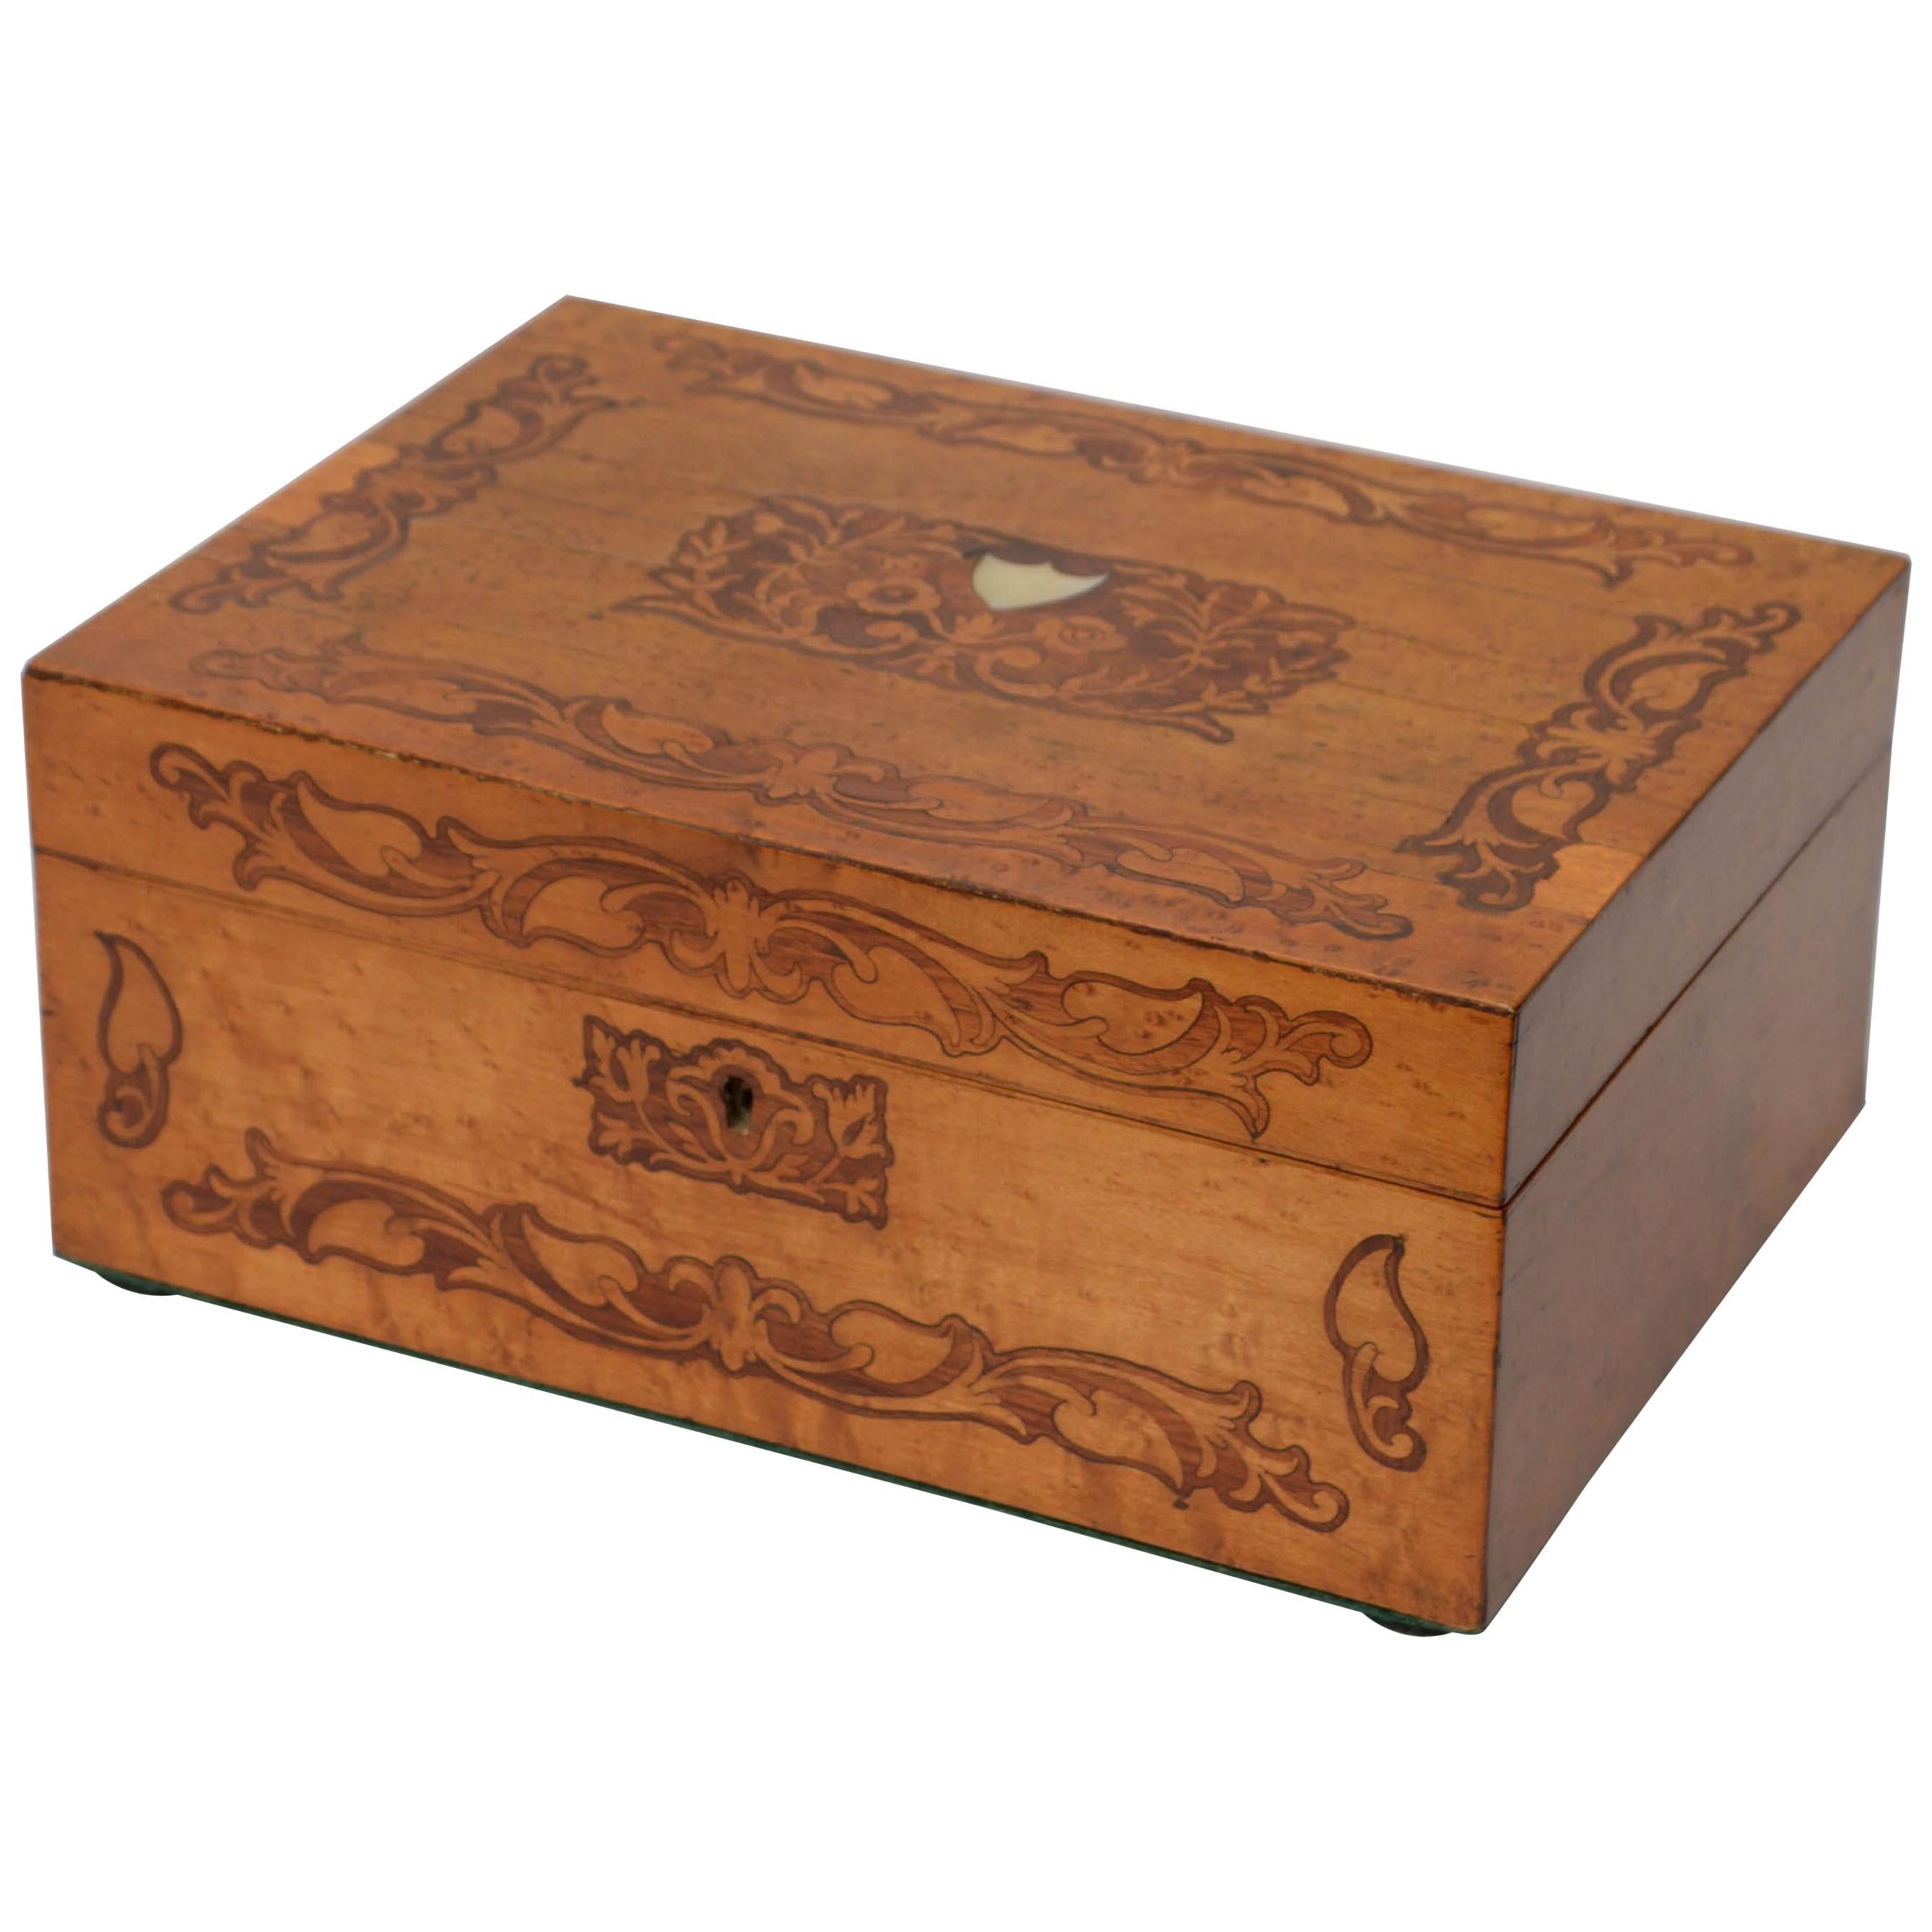 Superb Victorian Bird's-Eye Maple Jewelry Box